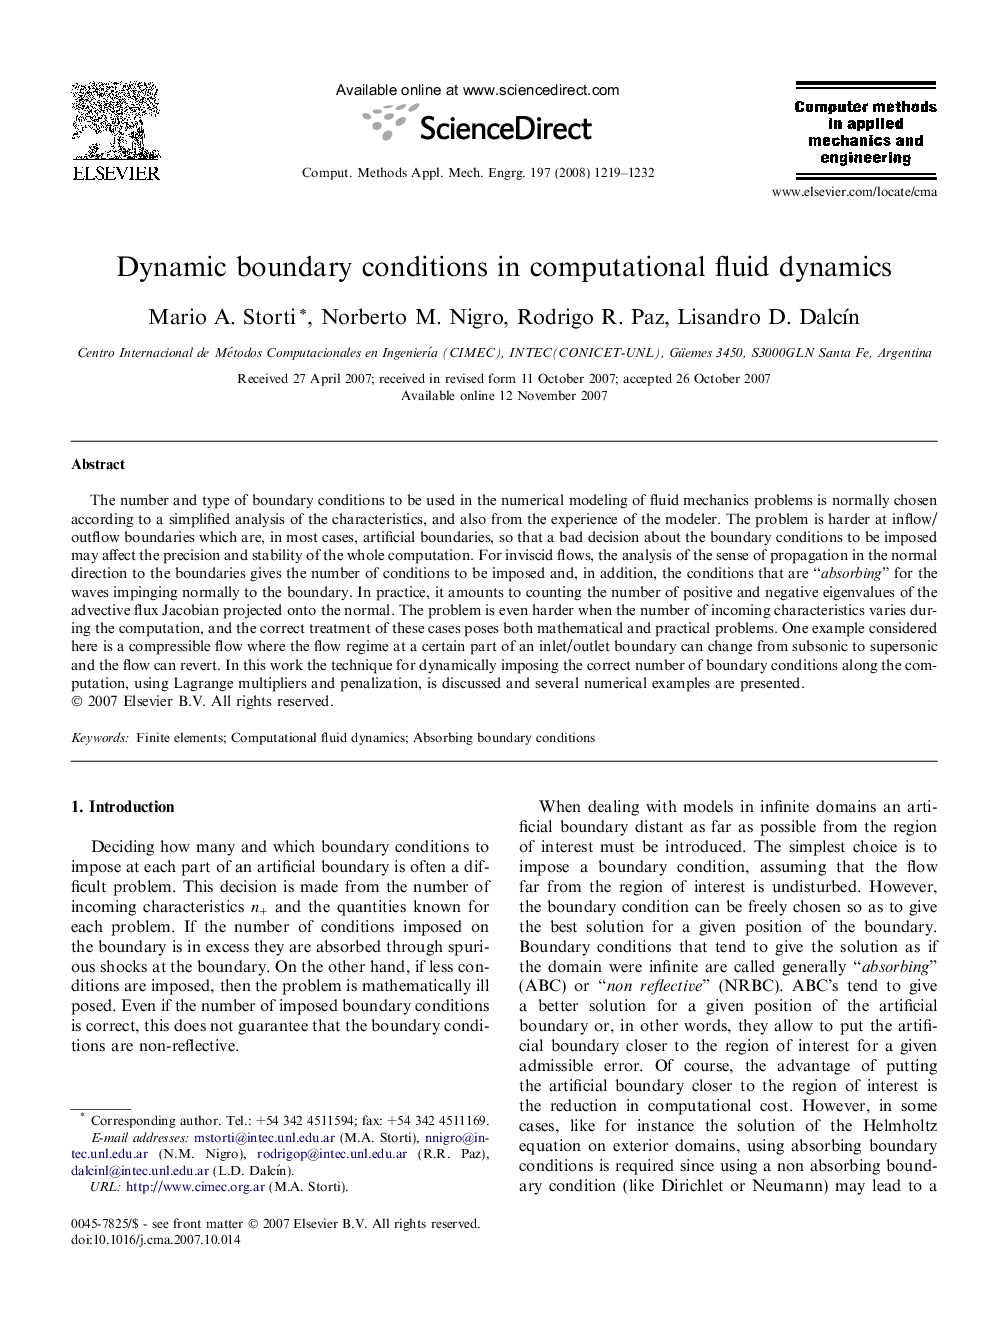 Dynamic boundary conditions in computational fluid dynamics